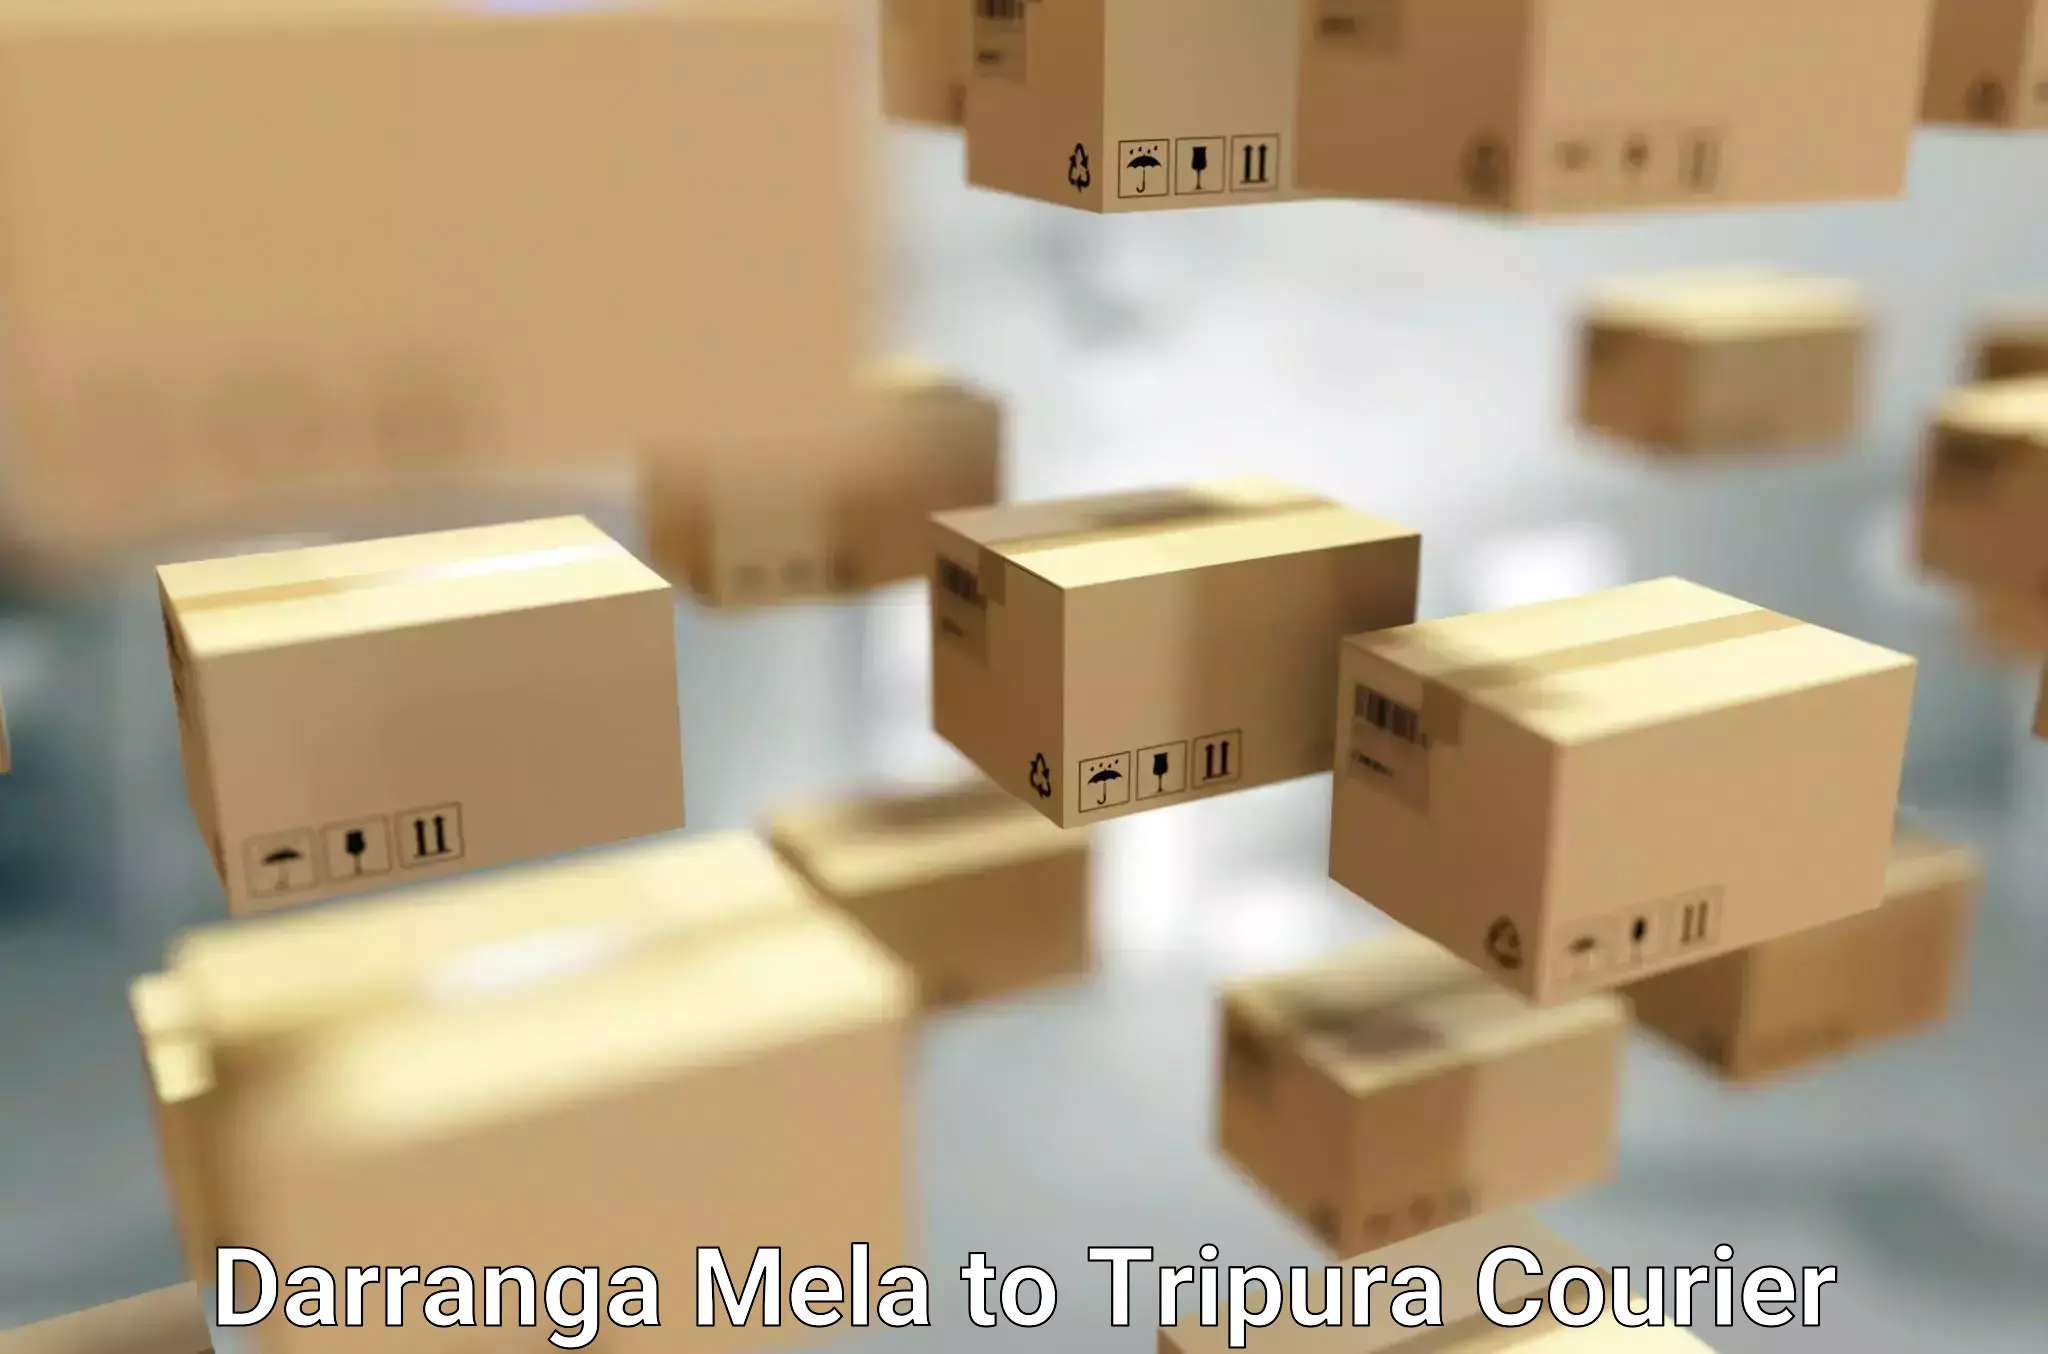 Hassle-free relocation Darranga Mela to Agartala